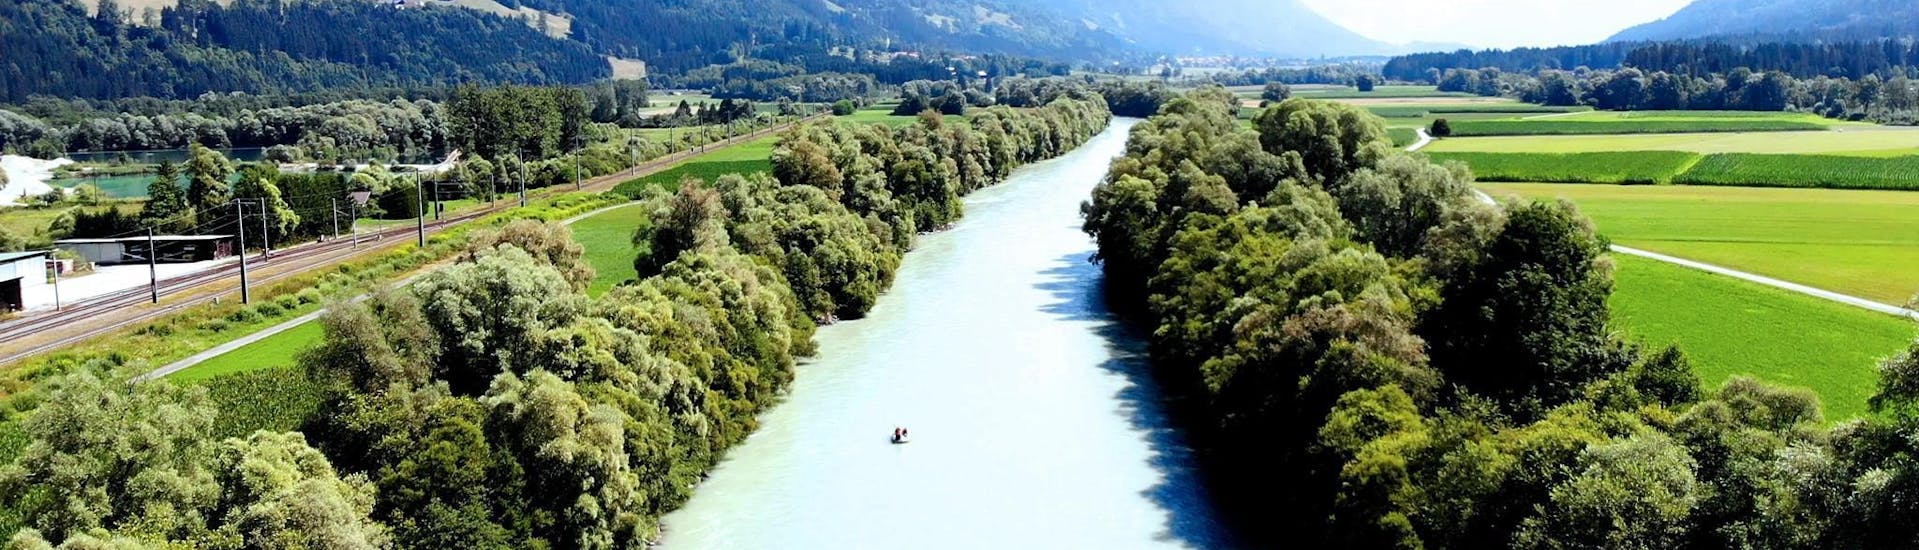 Rafting facile sul fiume Drava - Tour Dolomiti.